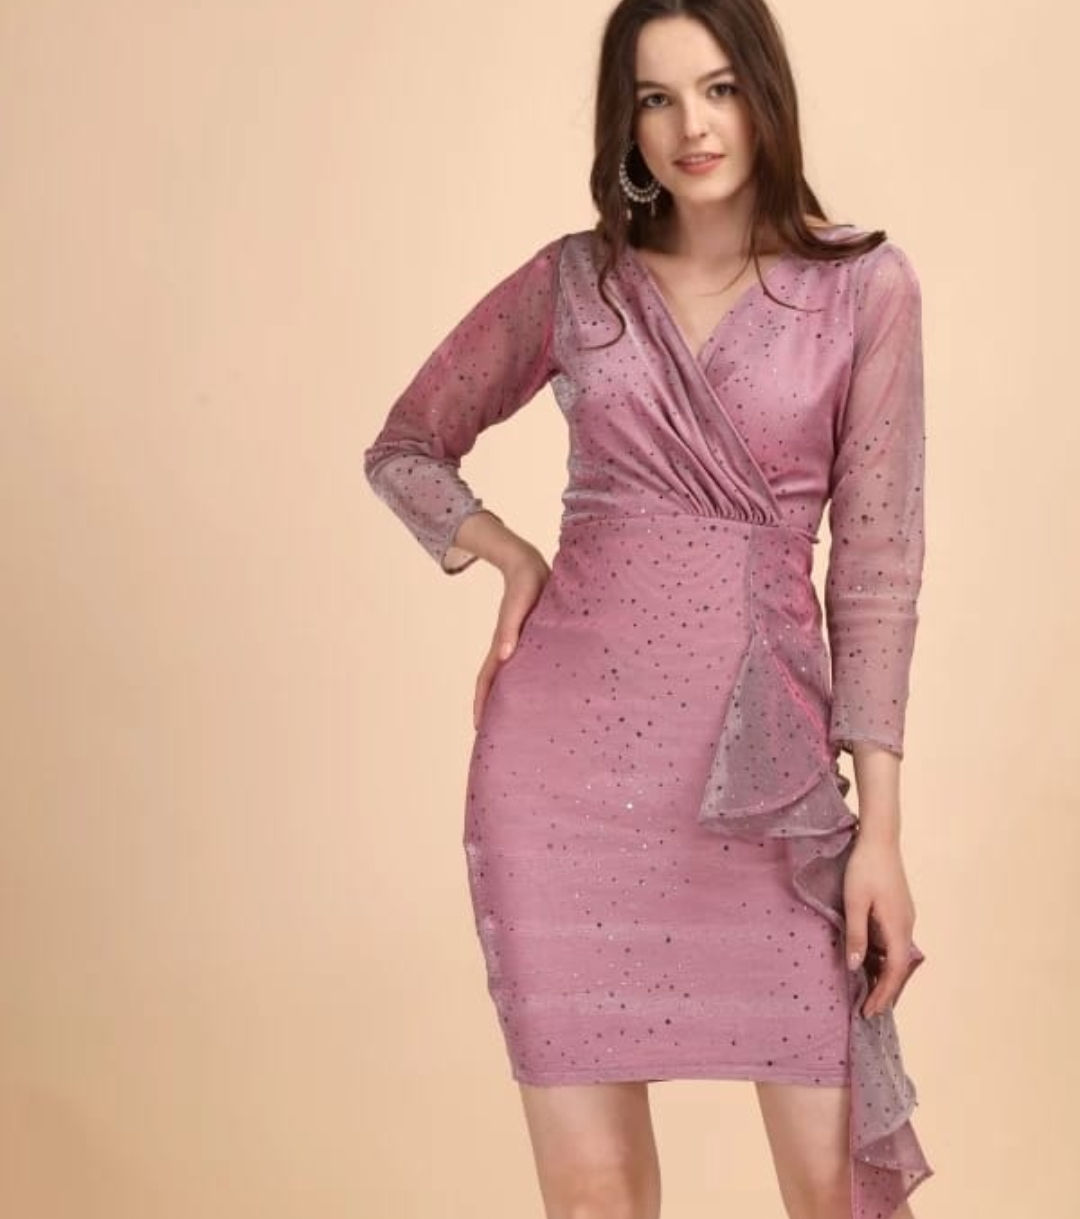 Sheetal Associates Women Bodycon Pink Dress - Buy Sh...